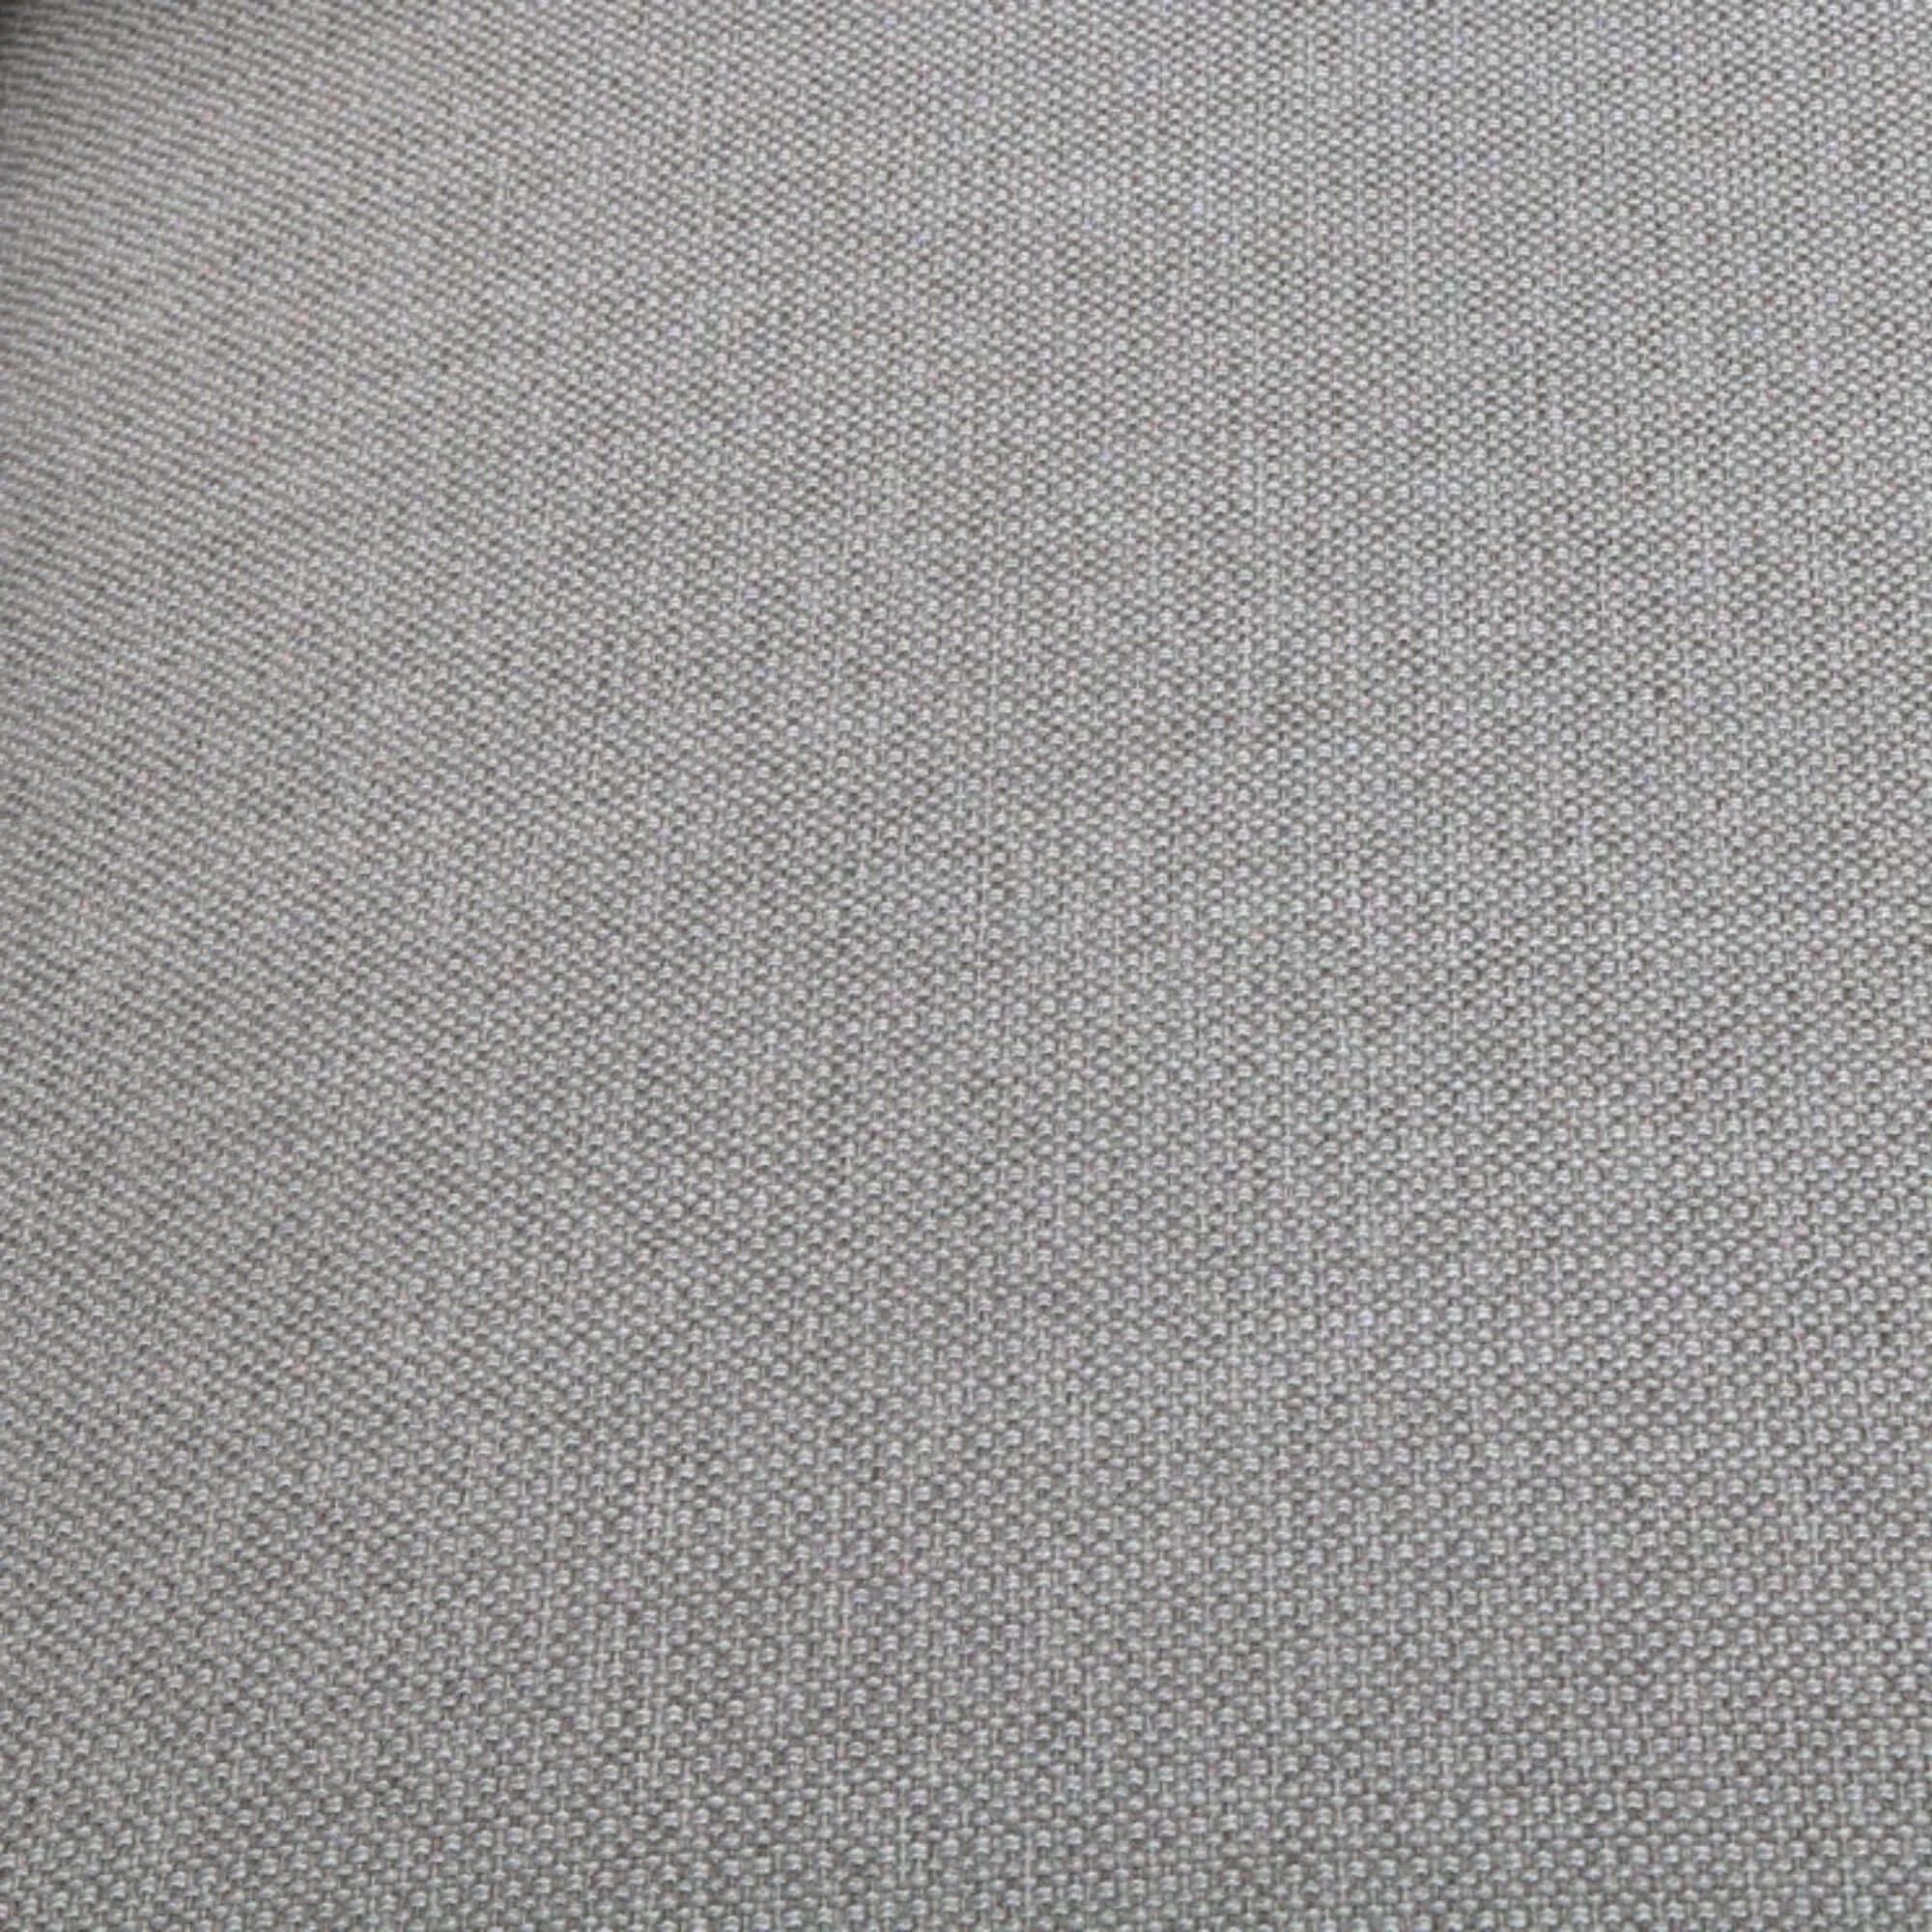 Buy petalsoft 3 seater sofa fabric uplholstered lounge couch - grey - upinteriors-Upinteriors